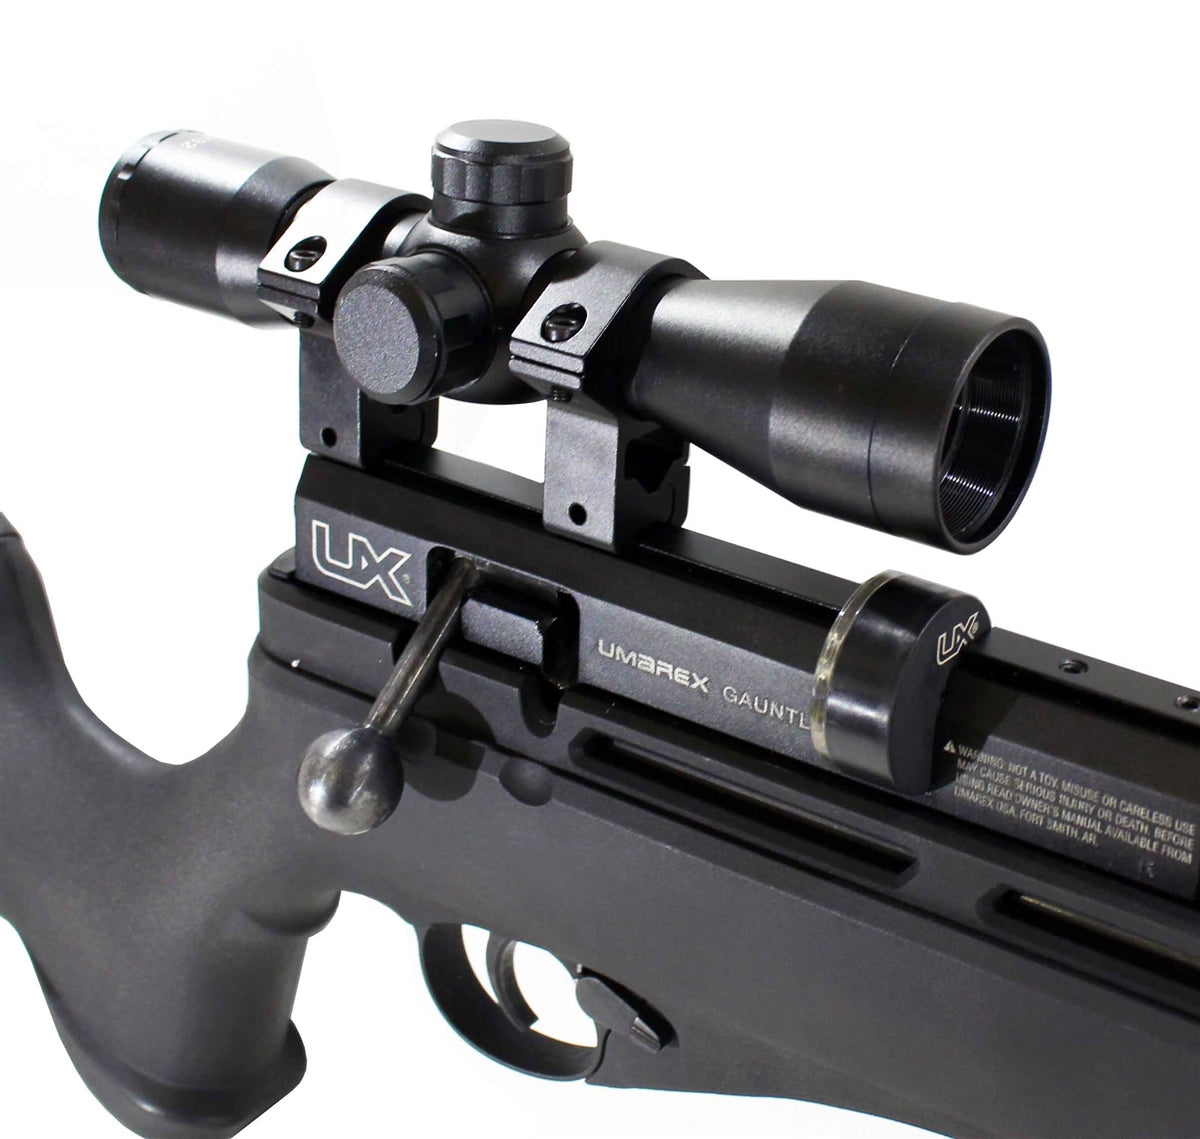 4x32 rifle scope.